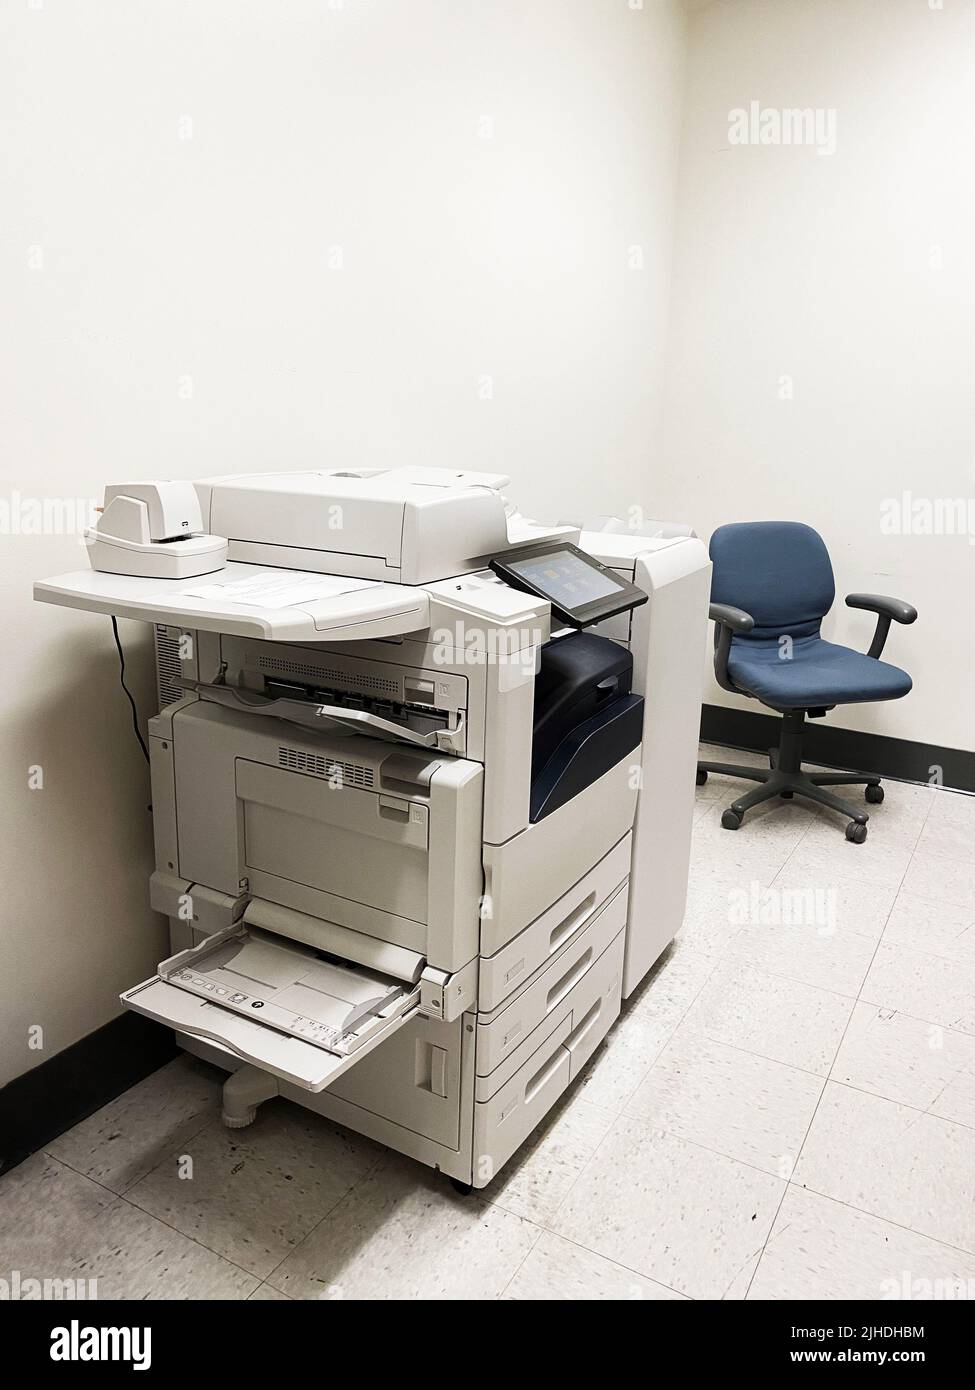 Ein Kopiergerät in einem Büro Stockfoto